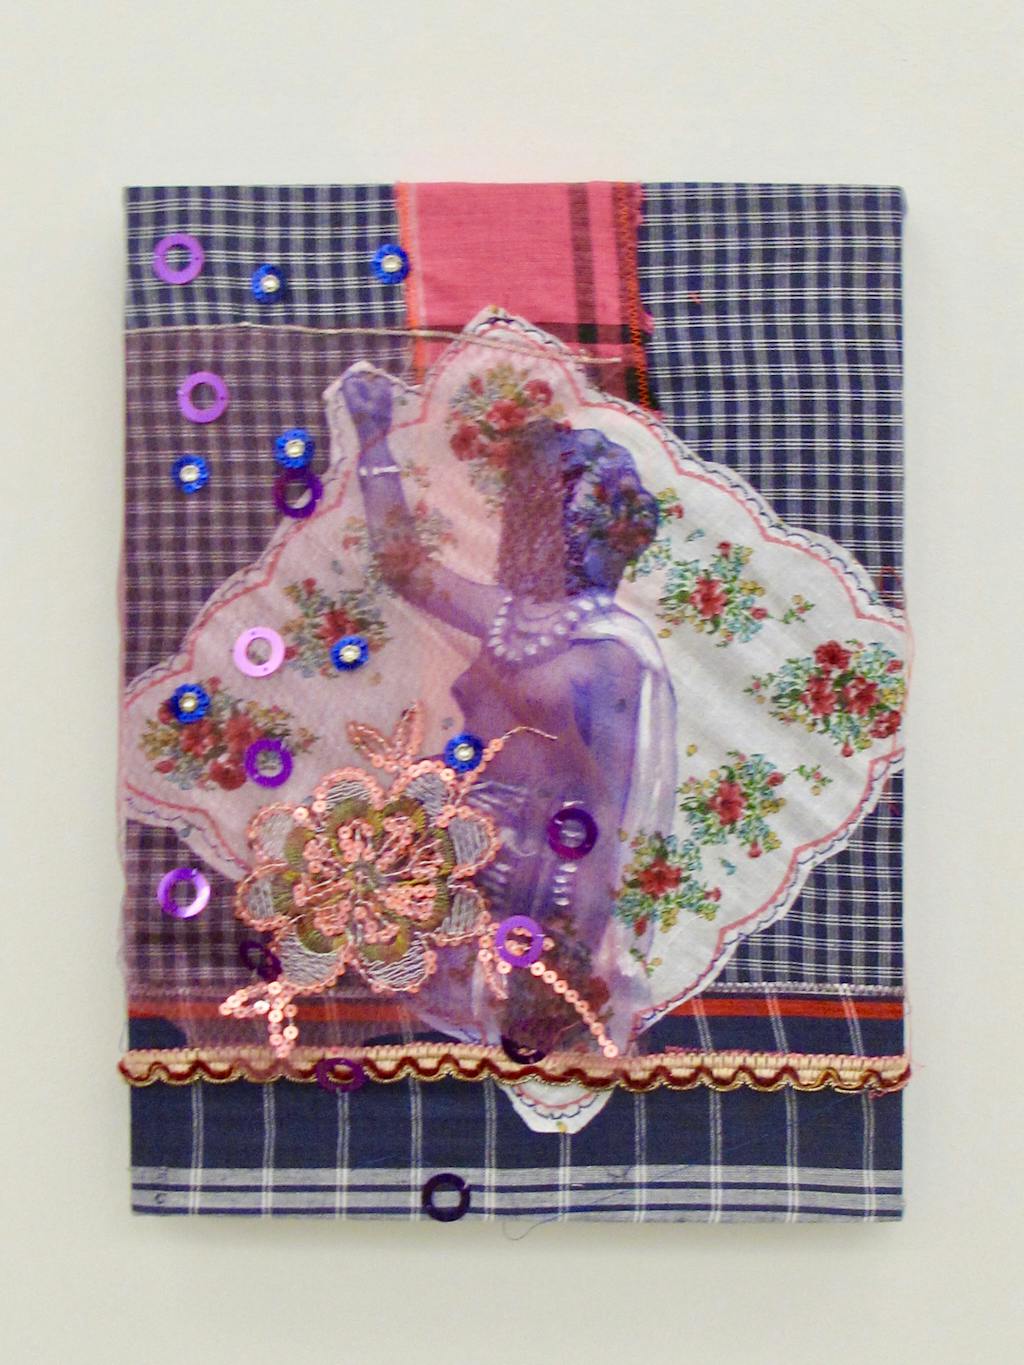 Patricia Kaersenhout
Distant Bodies, 2011
Collage of textiles, photographic print on handkerchief
Pangi Fabric, glitters, embroidery, stitching, paint
40 x 30 cm, unique (PK2011-2) - © Paris Internationale